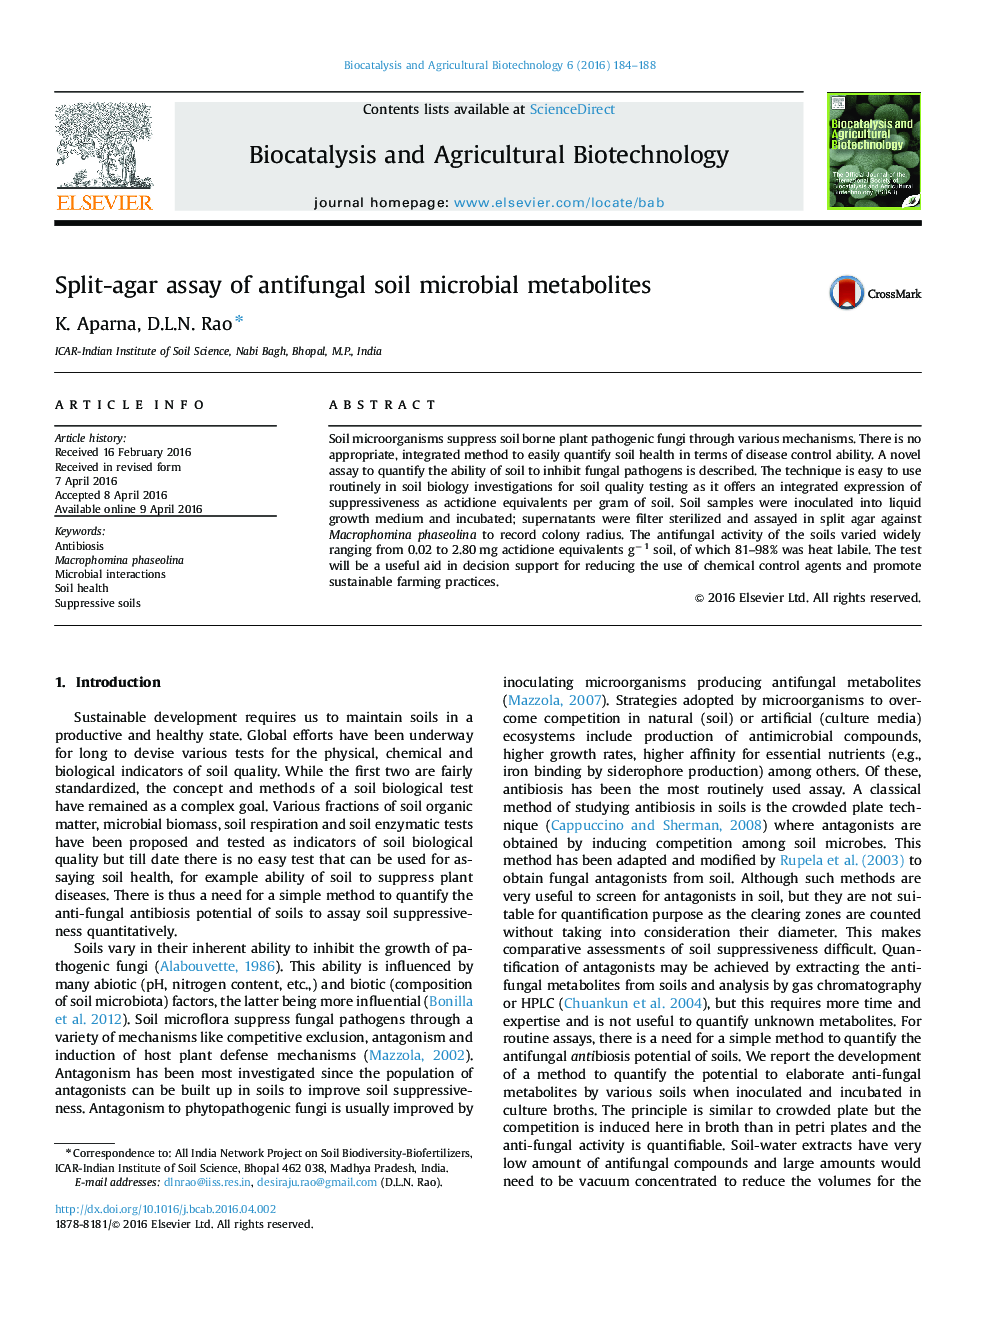 Split-agar assay of antifungal soil microbial metabolites